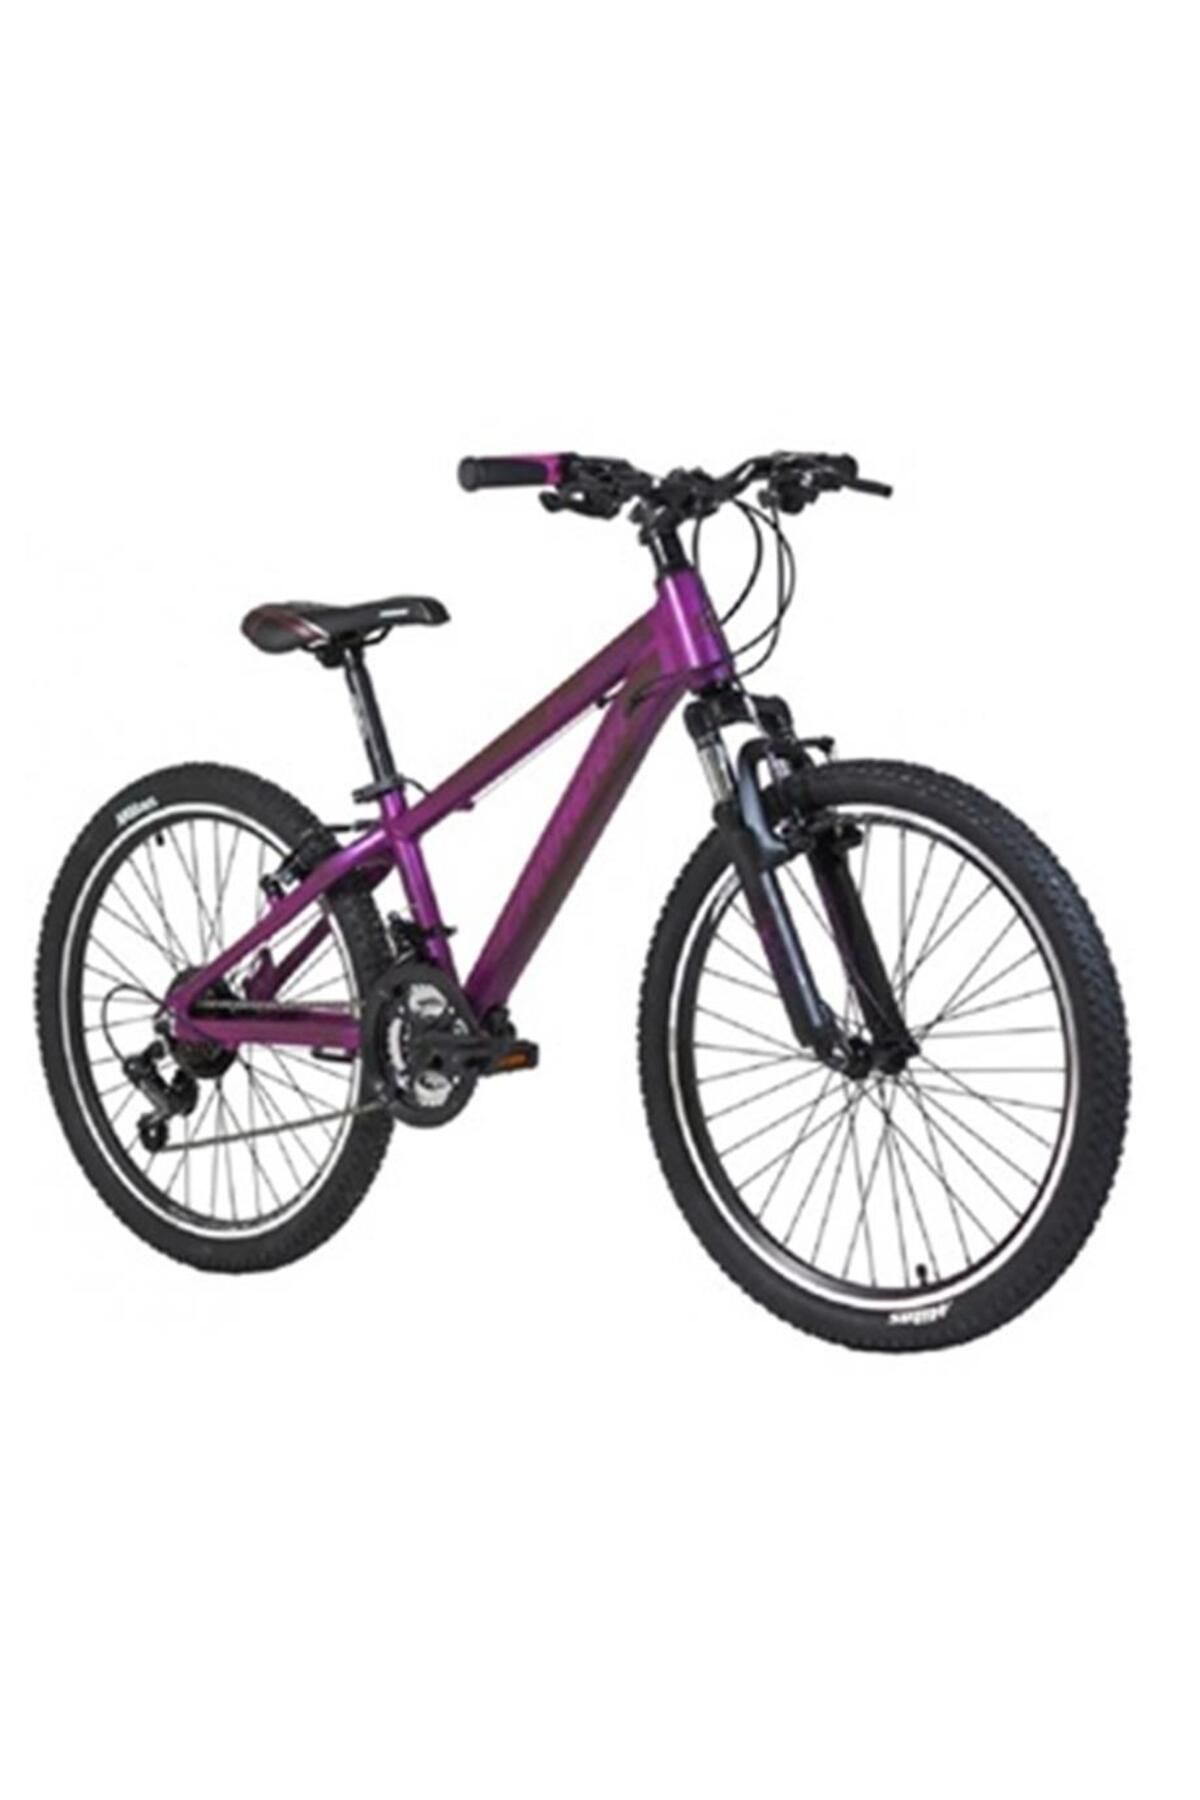 Carrera 2664 M6-2000-l-kadın Dağ Bisikleti 357h V 26 Jant 21 Vites Purple Purple